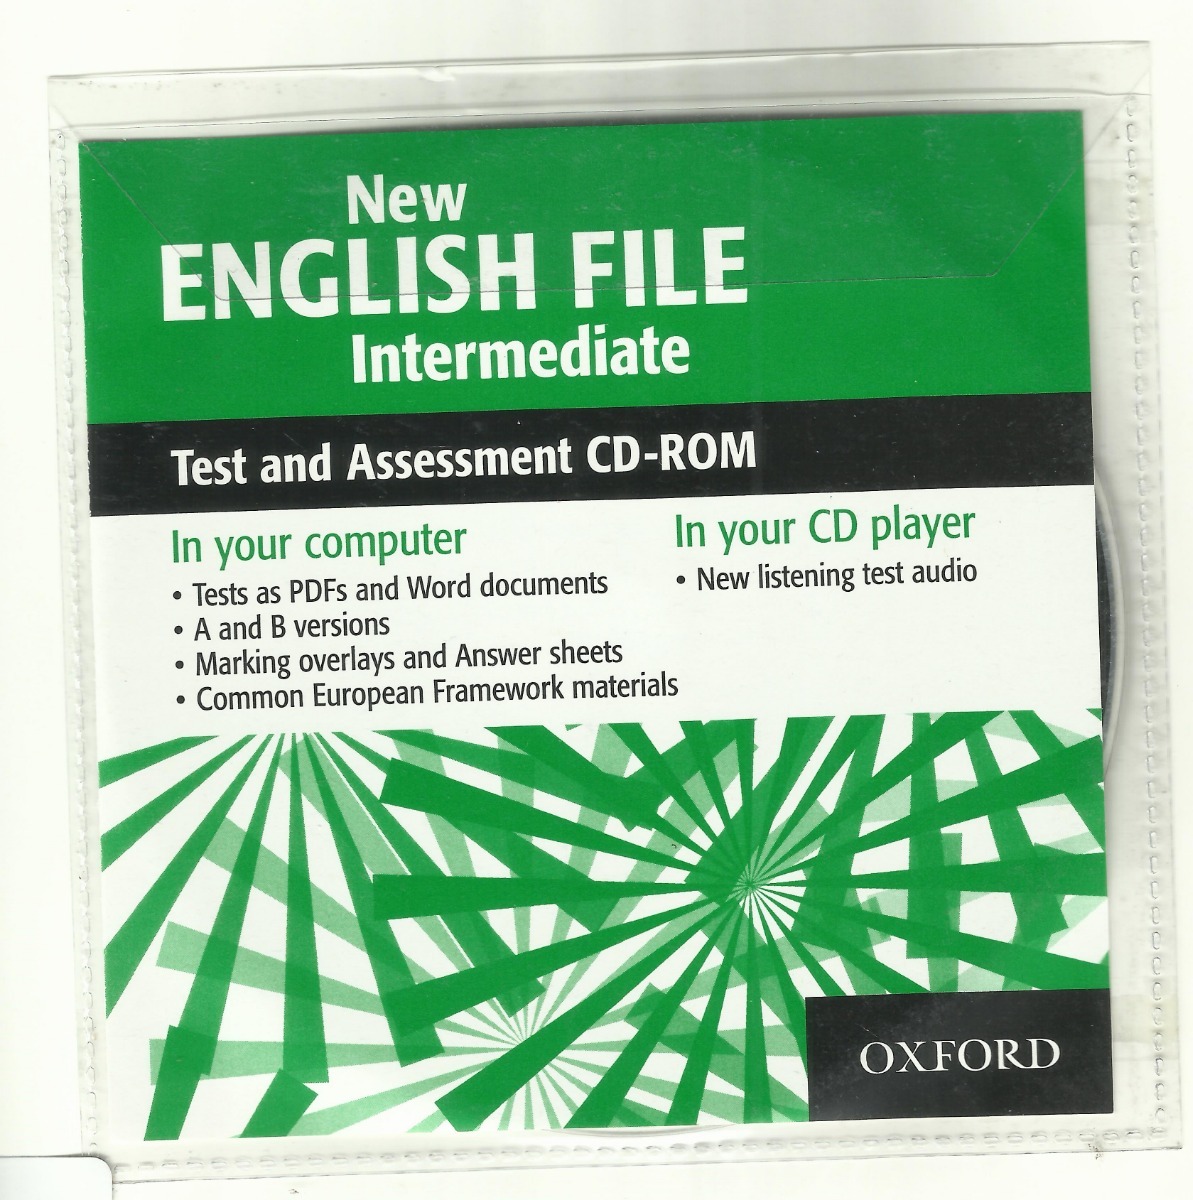 New English file Intermediate. Mood food English file Intermediate. English file Upper Intermediate Tests. 5.6 New English file Intermediate. English file intermediate 5